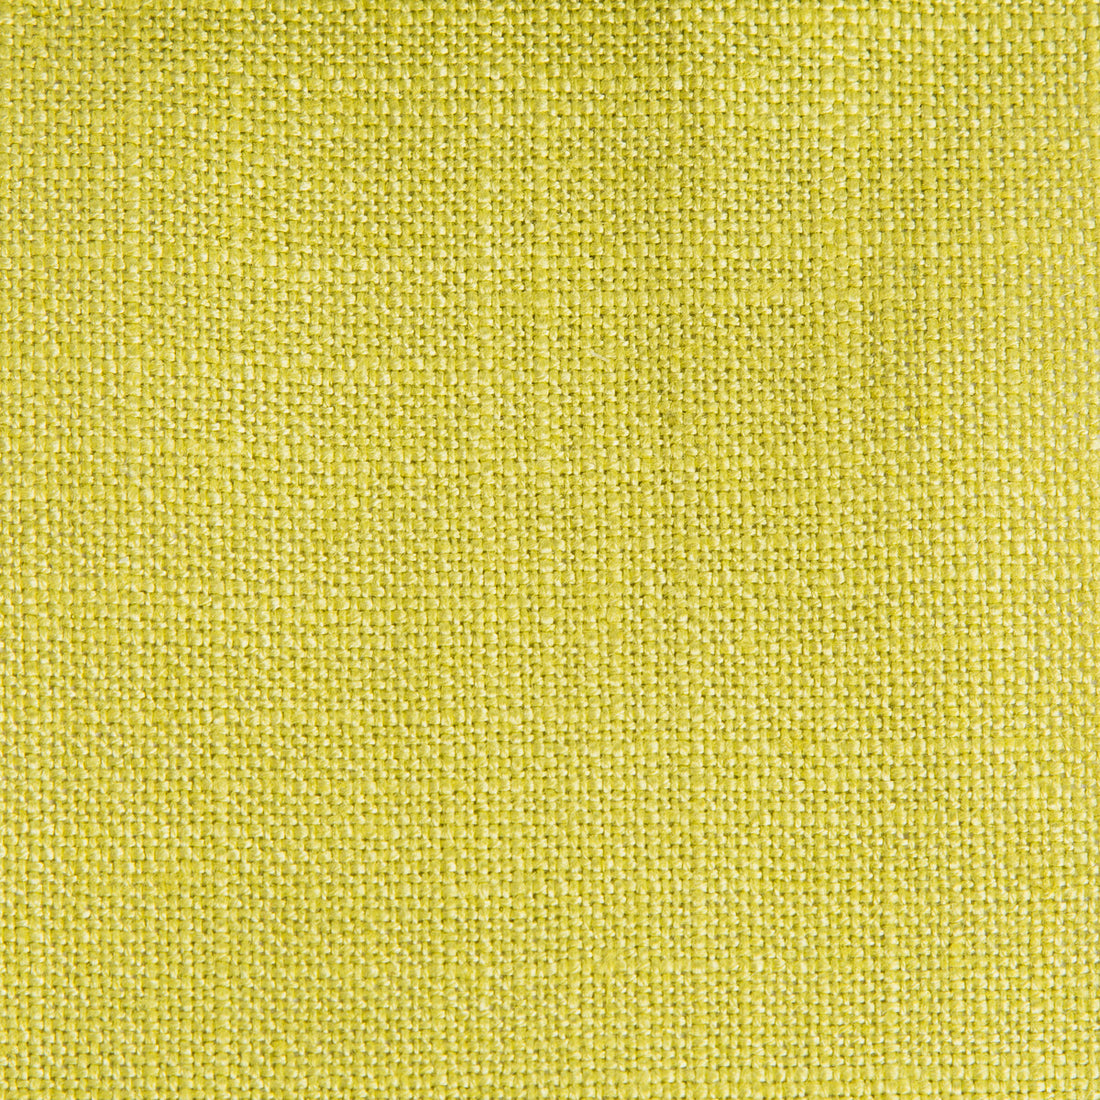 Peru fabric in lima color - pattern GDT5548.009.0 - by Gaston y Daniela in the Gaston Nuevo Mundo collection